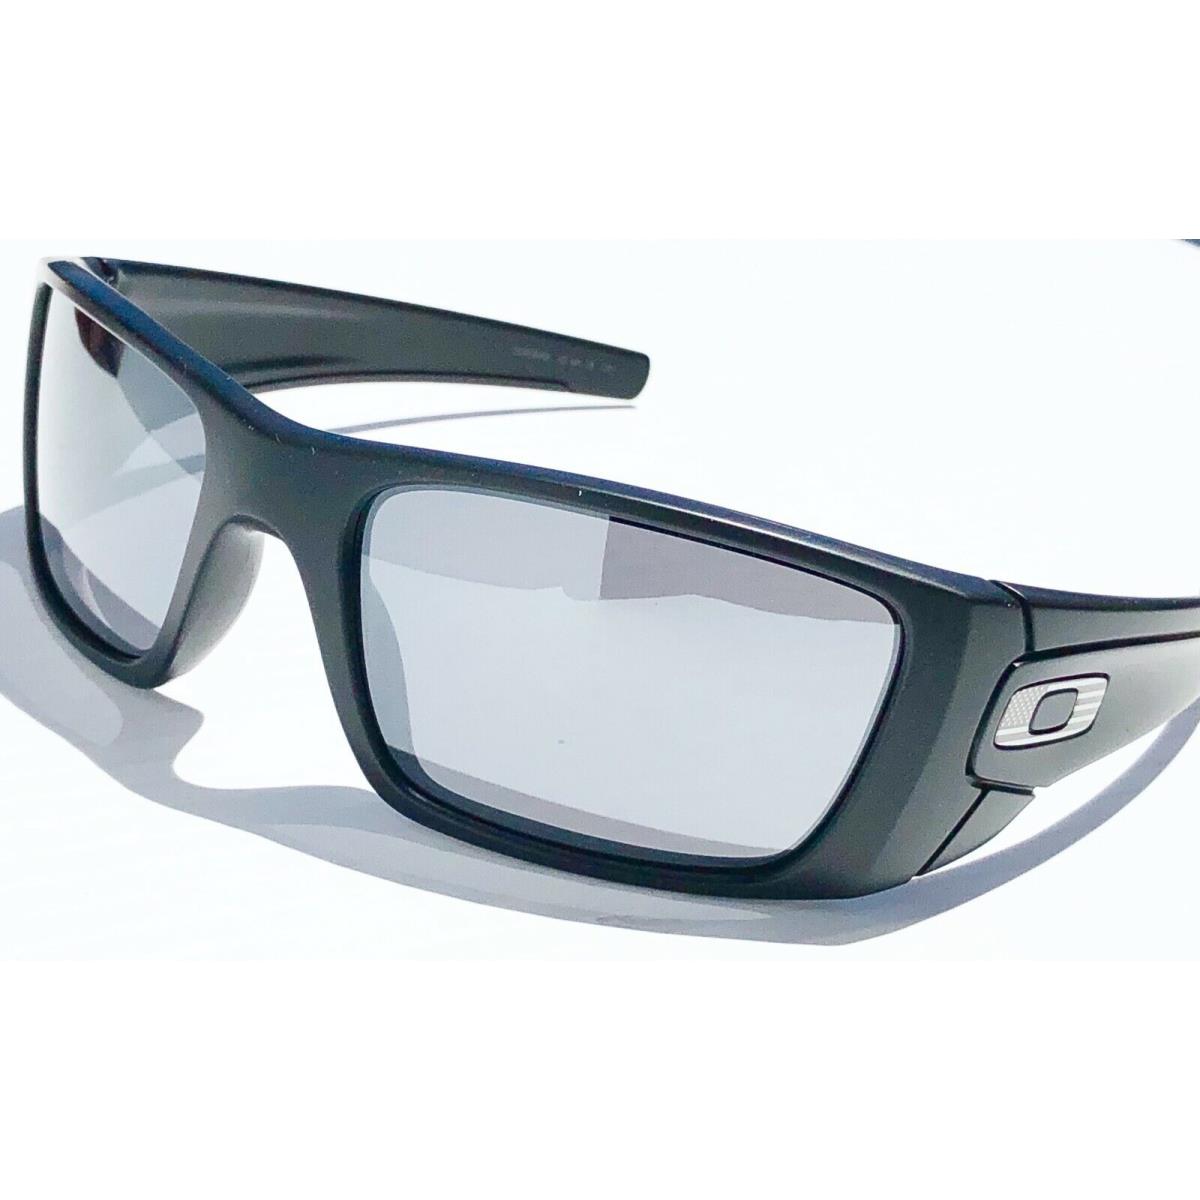 Oakley sunglasses Fuel Cell - Black Frame, Silver Lens 7